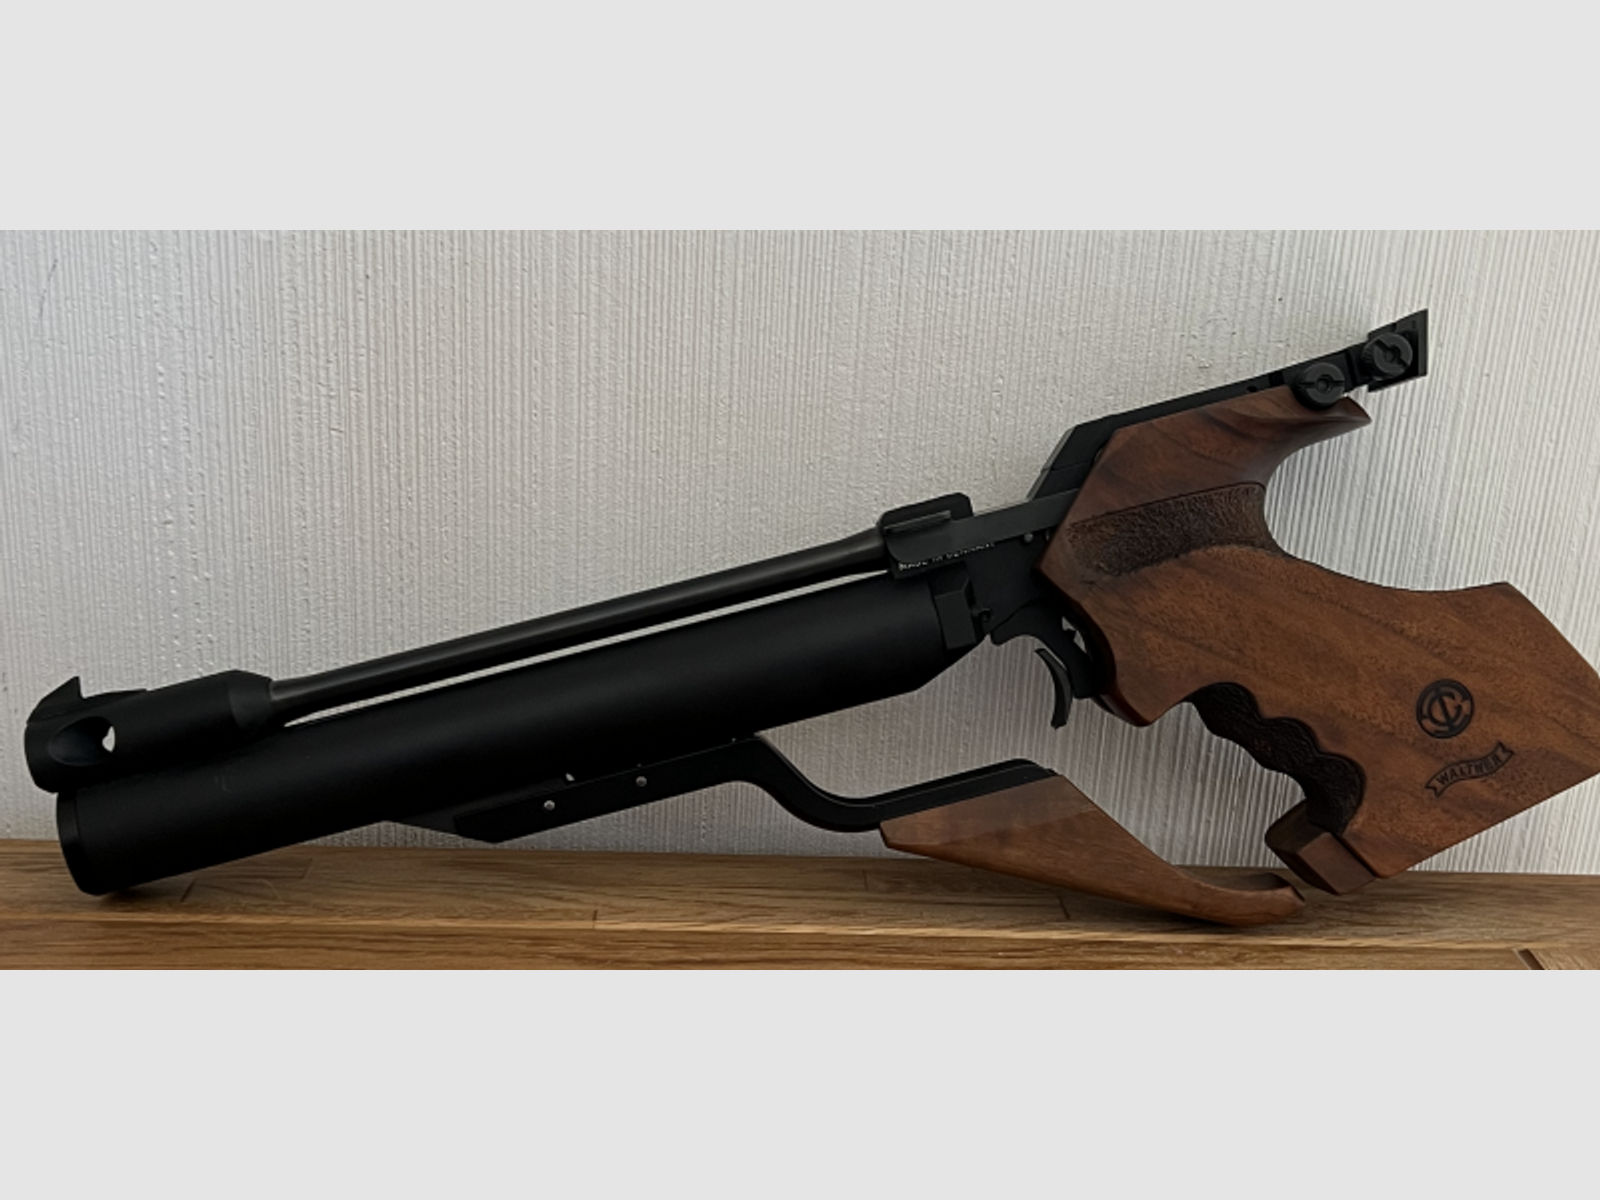 -TOP-SAMMLER-Komplettset- selten- Walther LPM 1 Matchluftpistole-